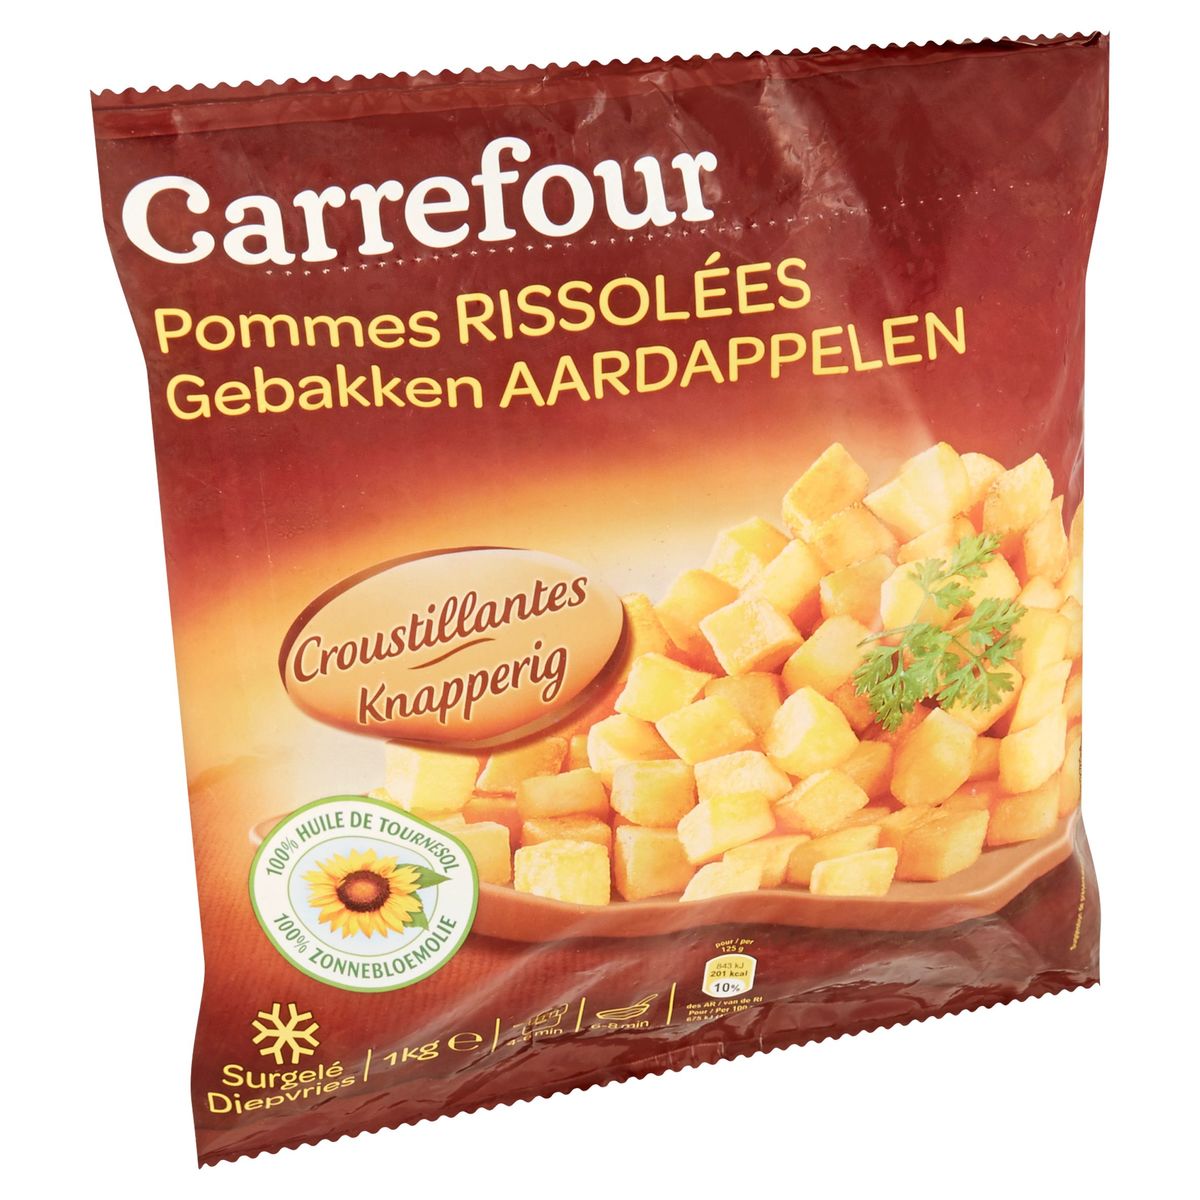 Carrefour Gebakken Aardappelen Knapperig 1 kg